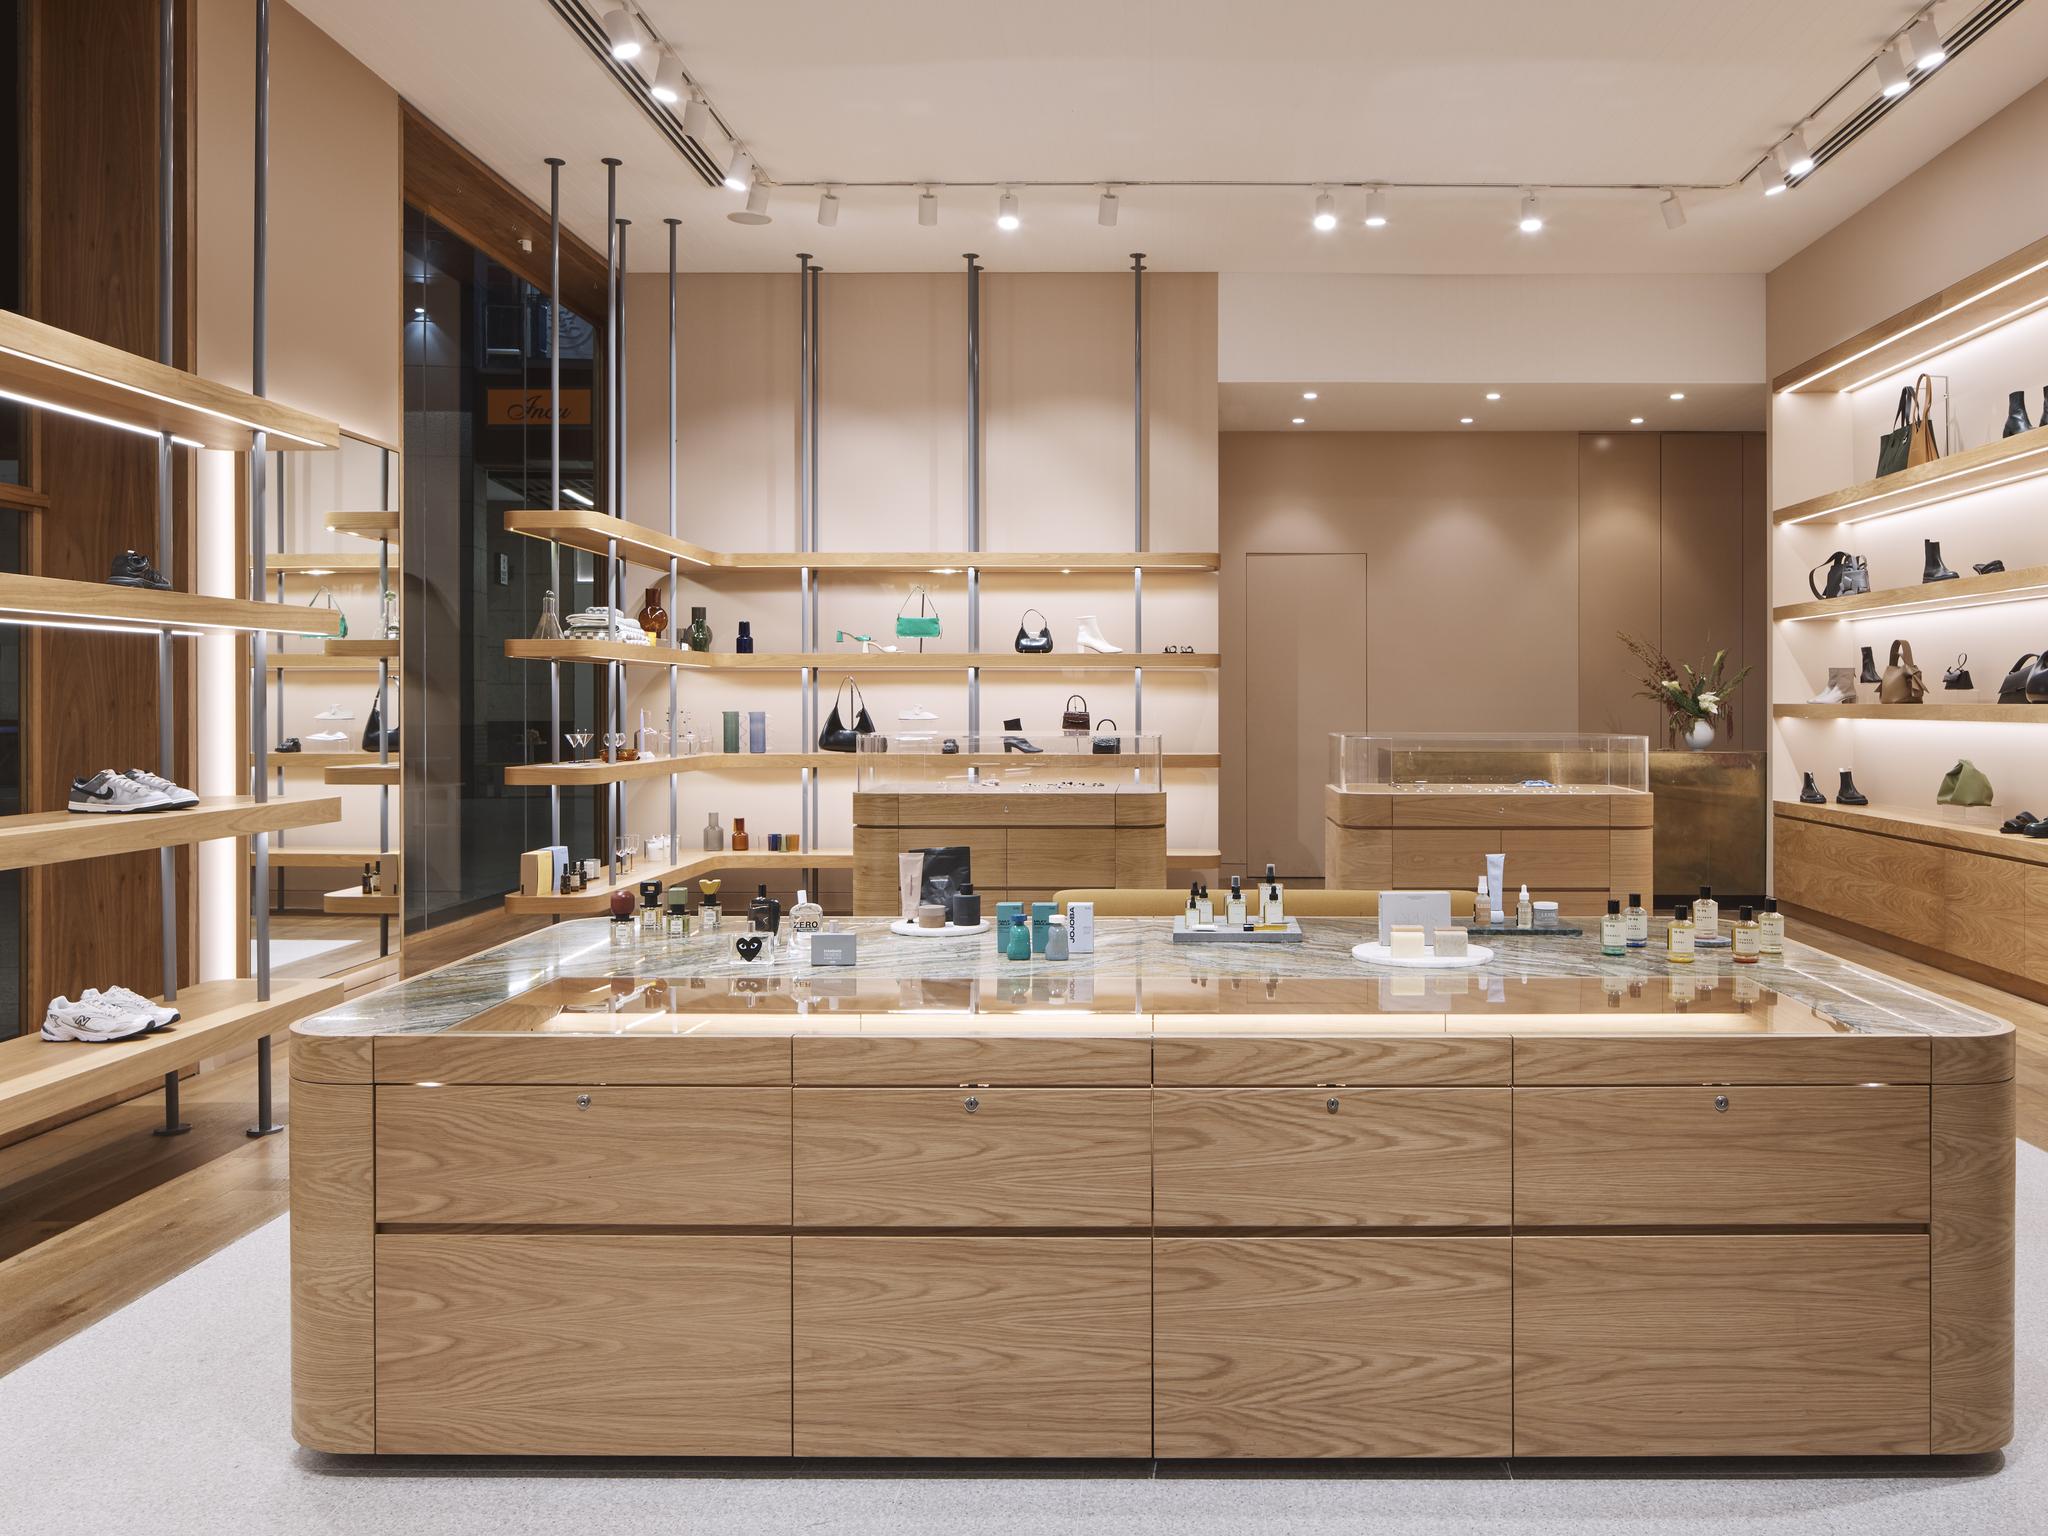 Louis Vuitton reopens art-filled store in Sydney - Inside Retail Australia